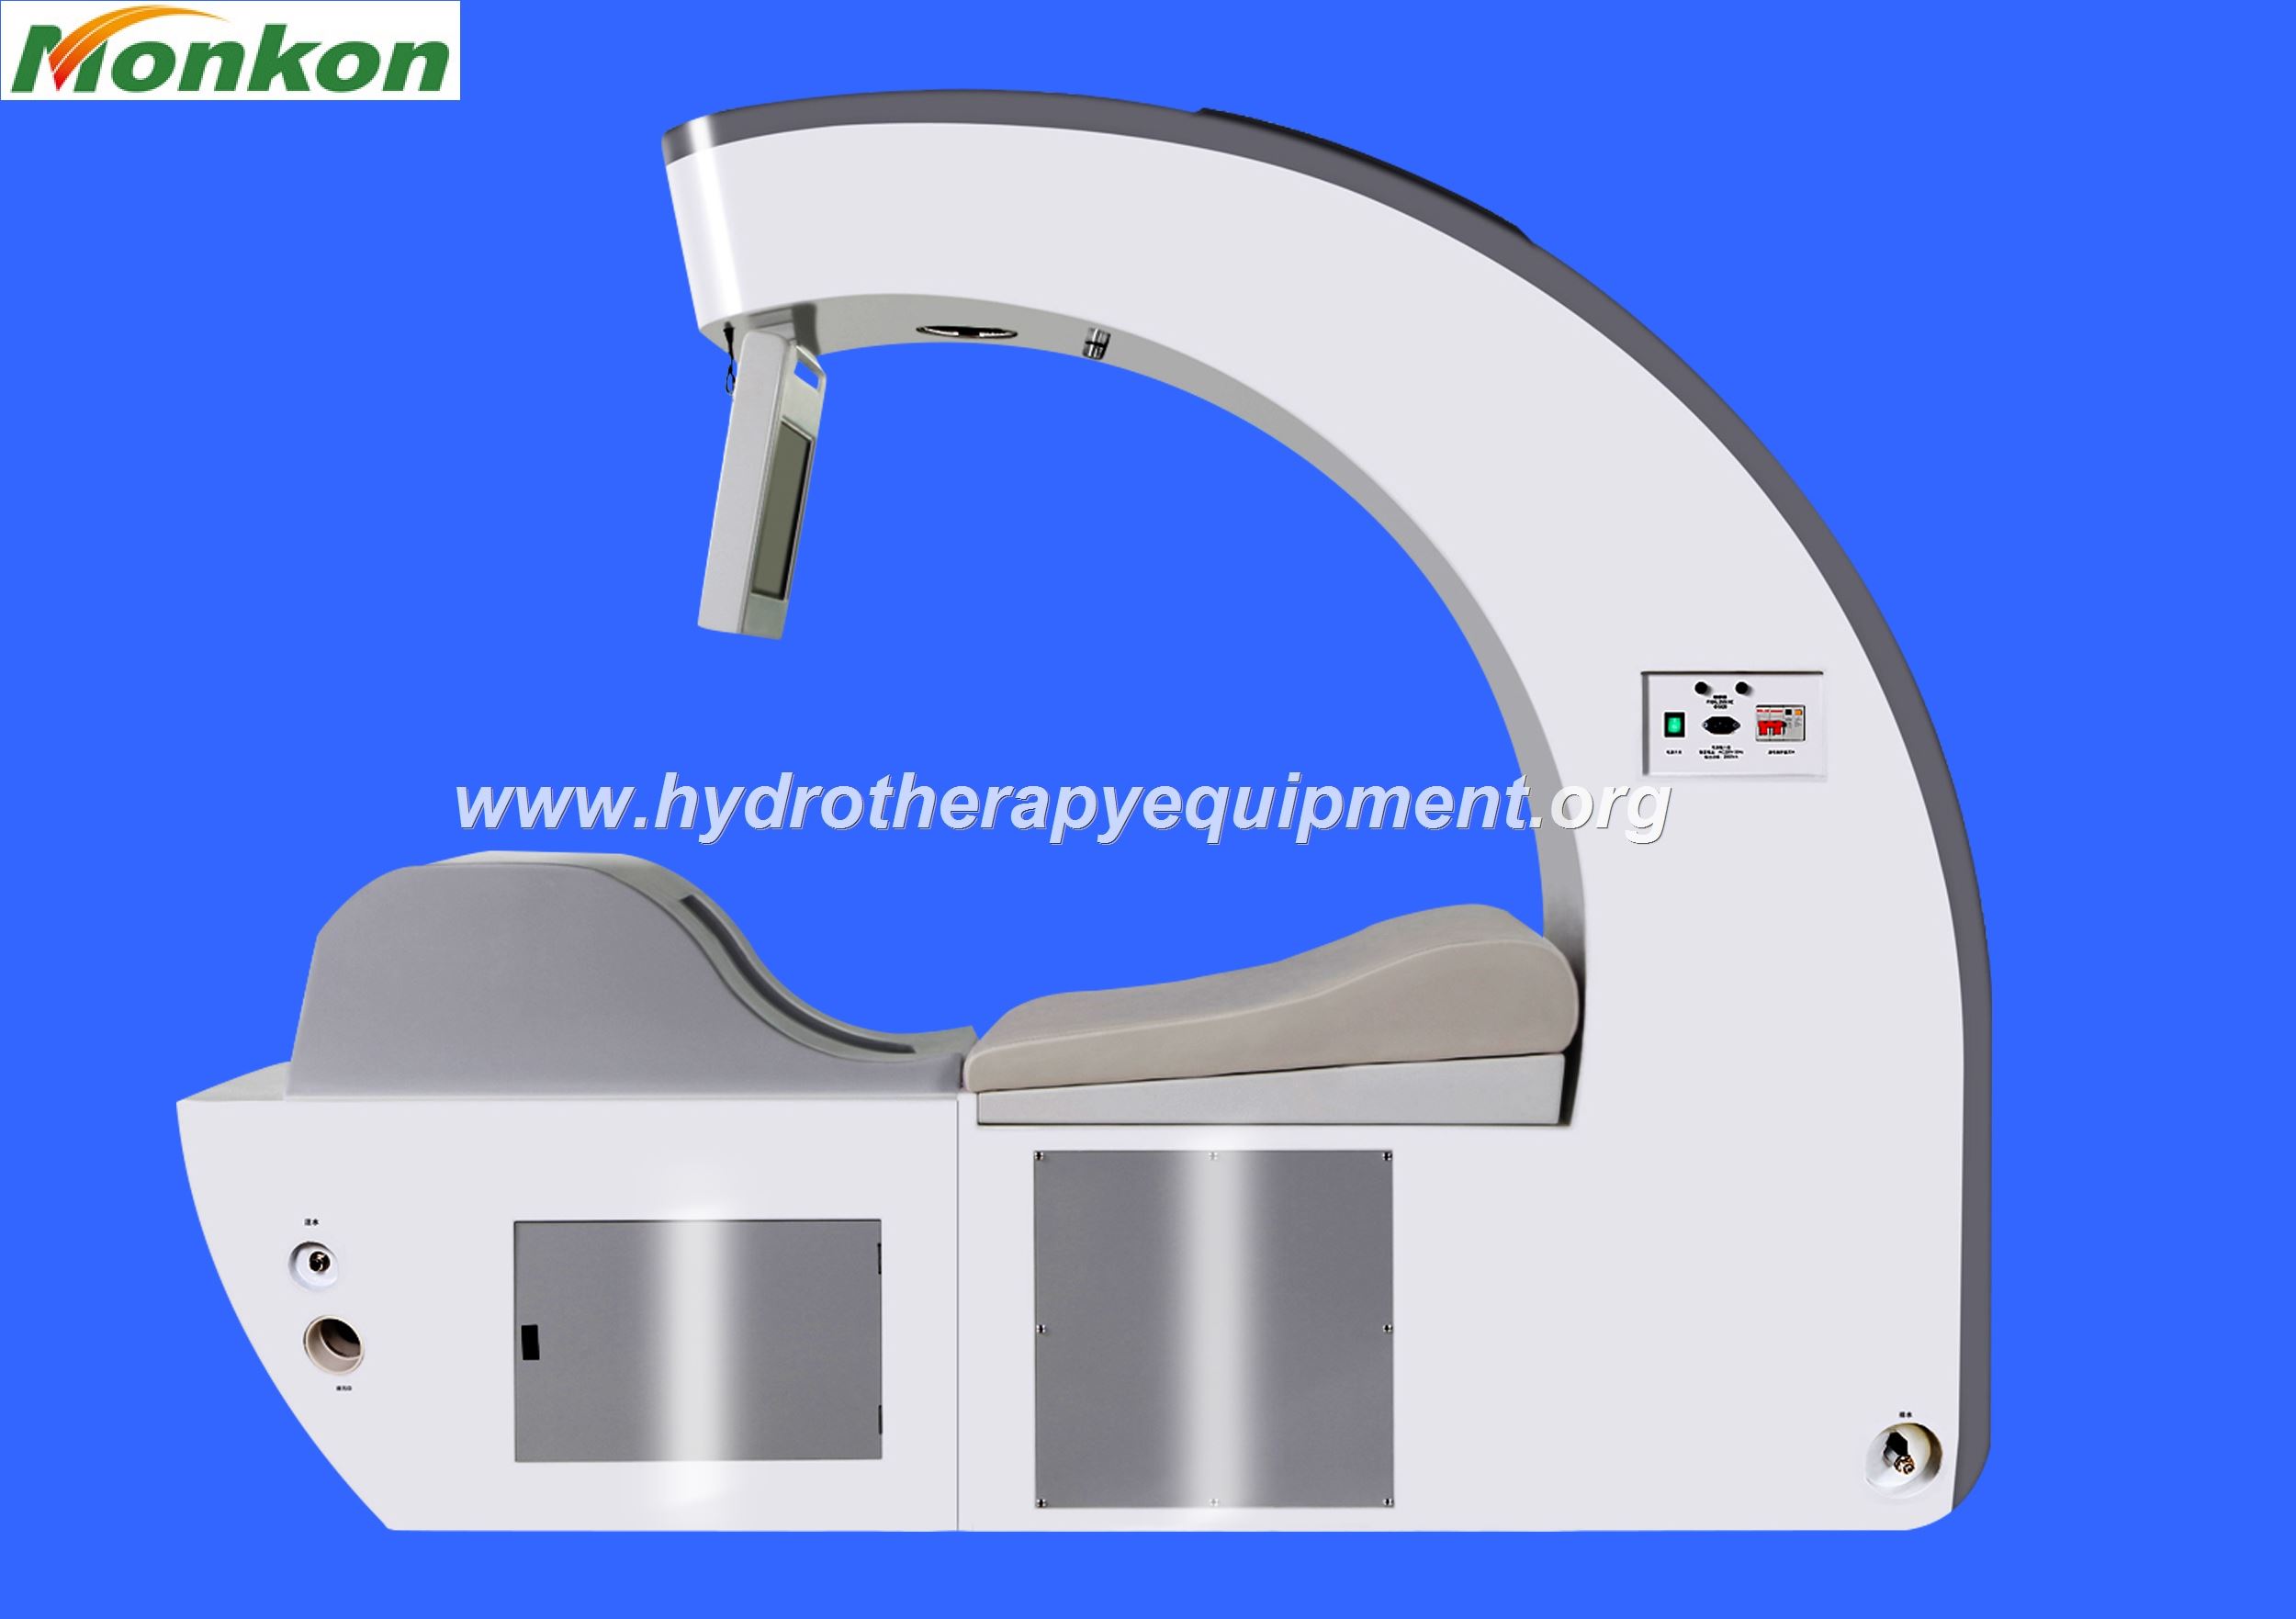 colon hydrotherapy equipment price india